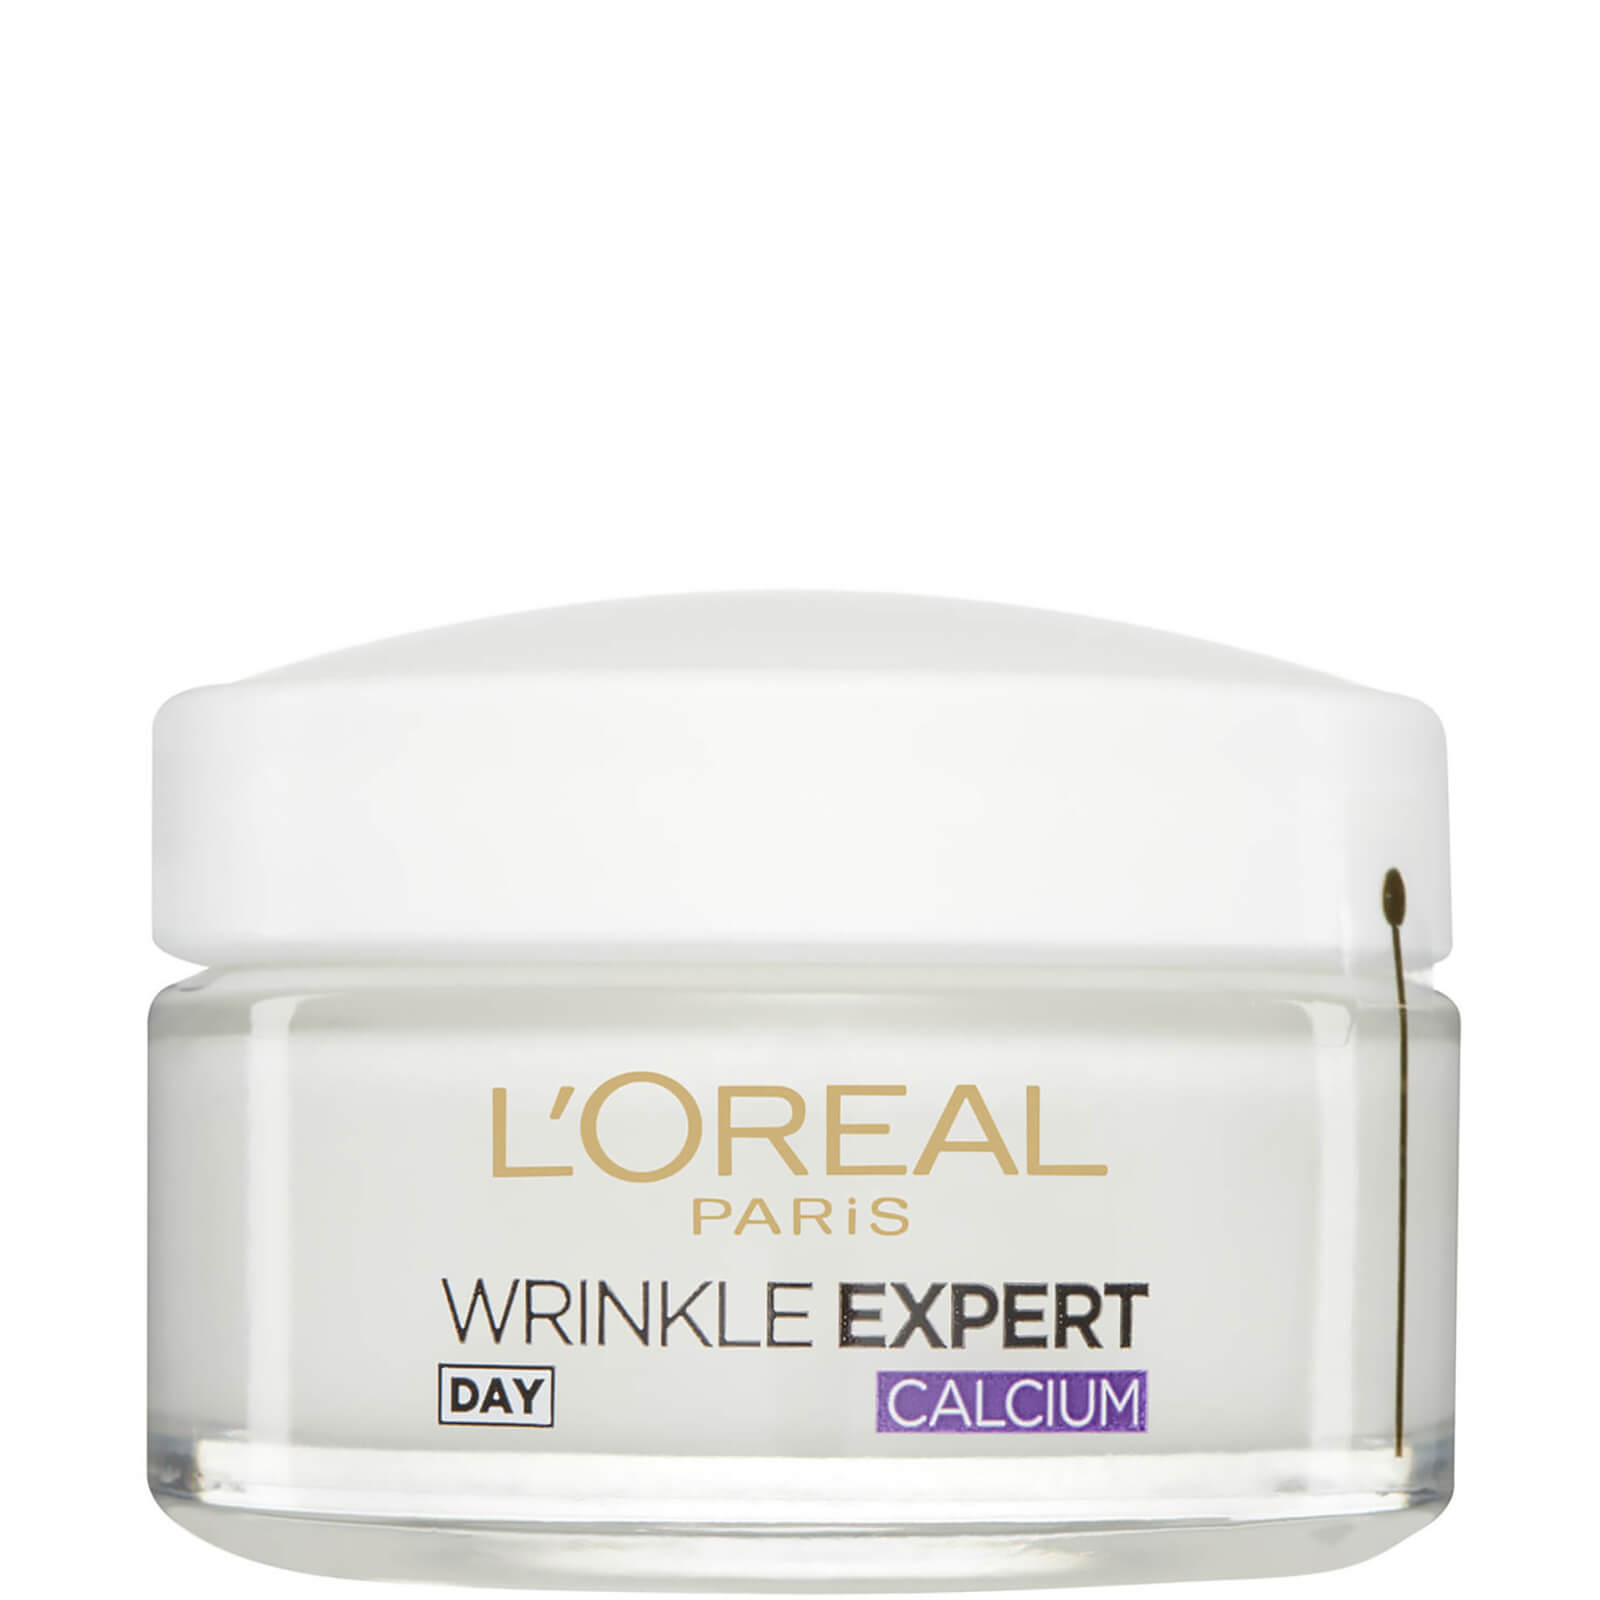 L`Oréal Paris Wrinkle Expert 55+ Calcium Anti-Wrinkle & Restoring Day Cream 50ml lookfantastic.com imagine